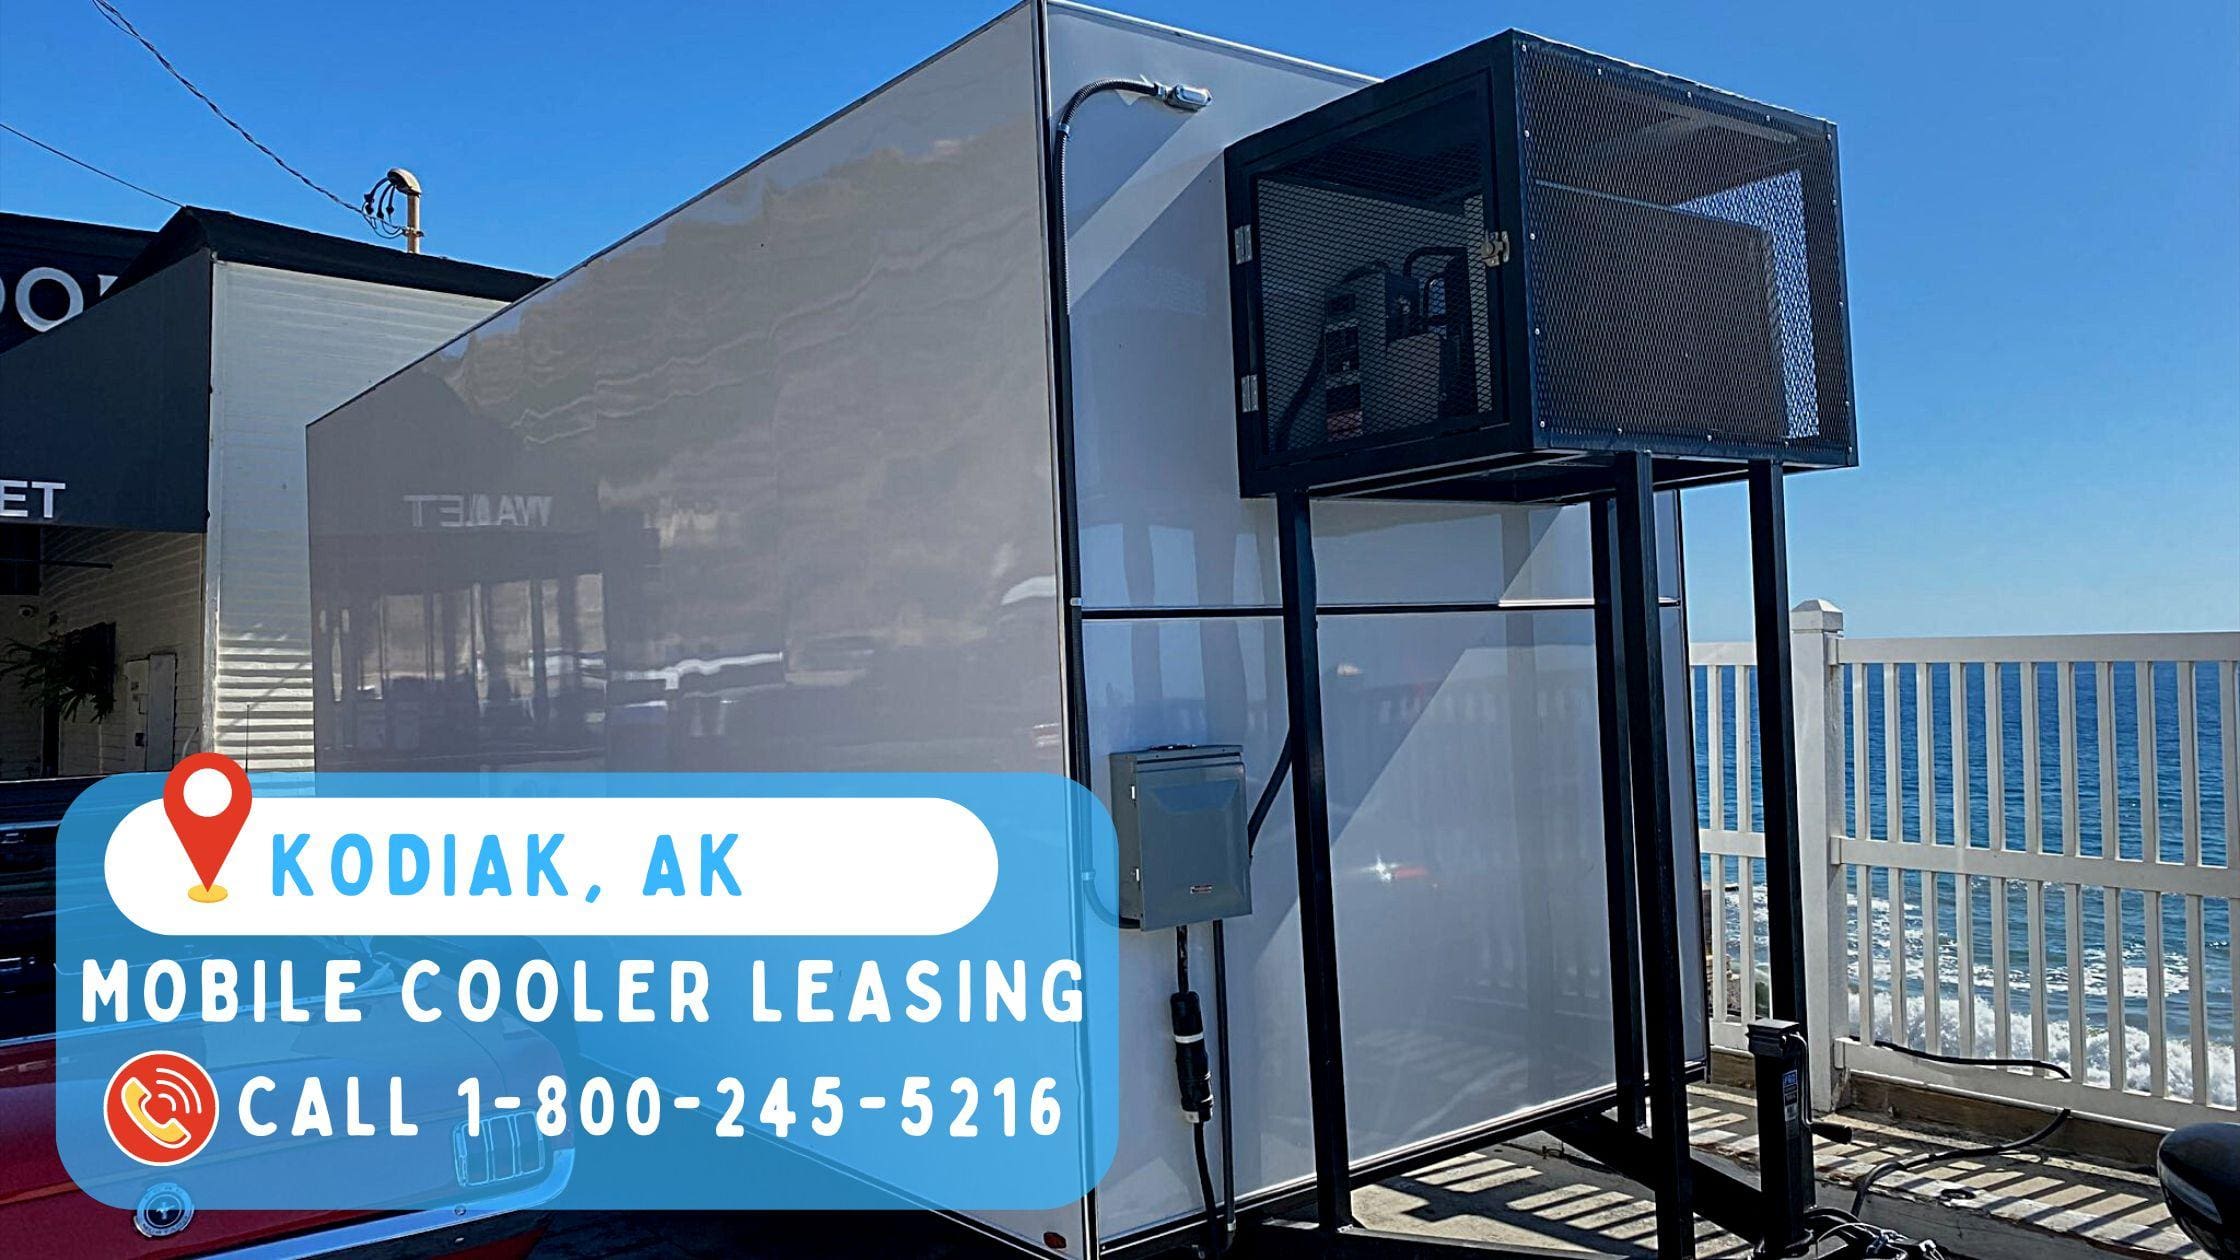 Mobile Cooler Leasing in Kodiak